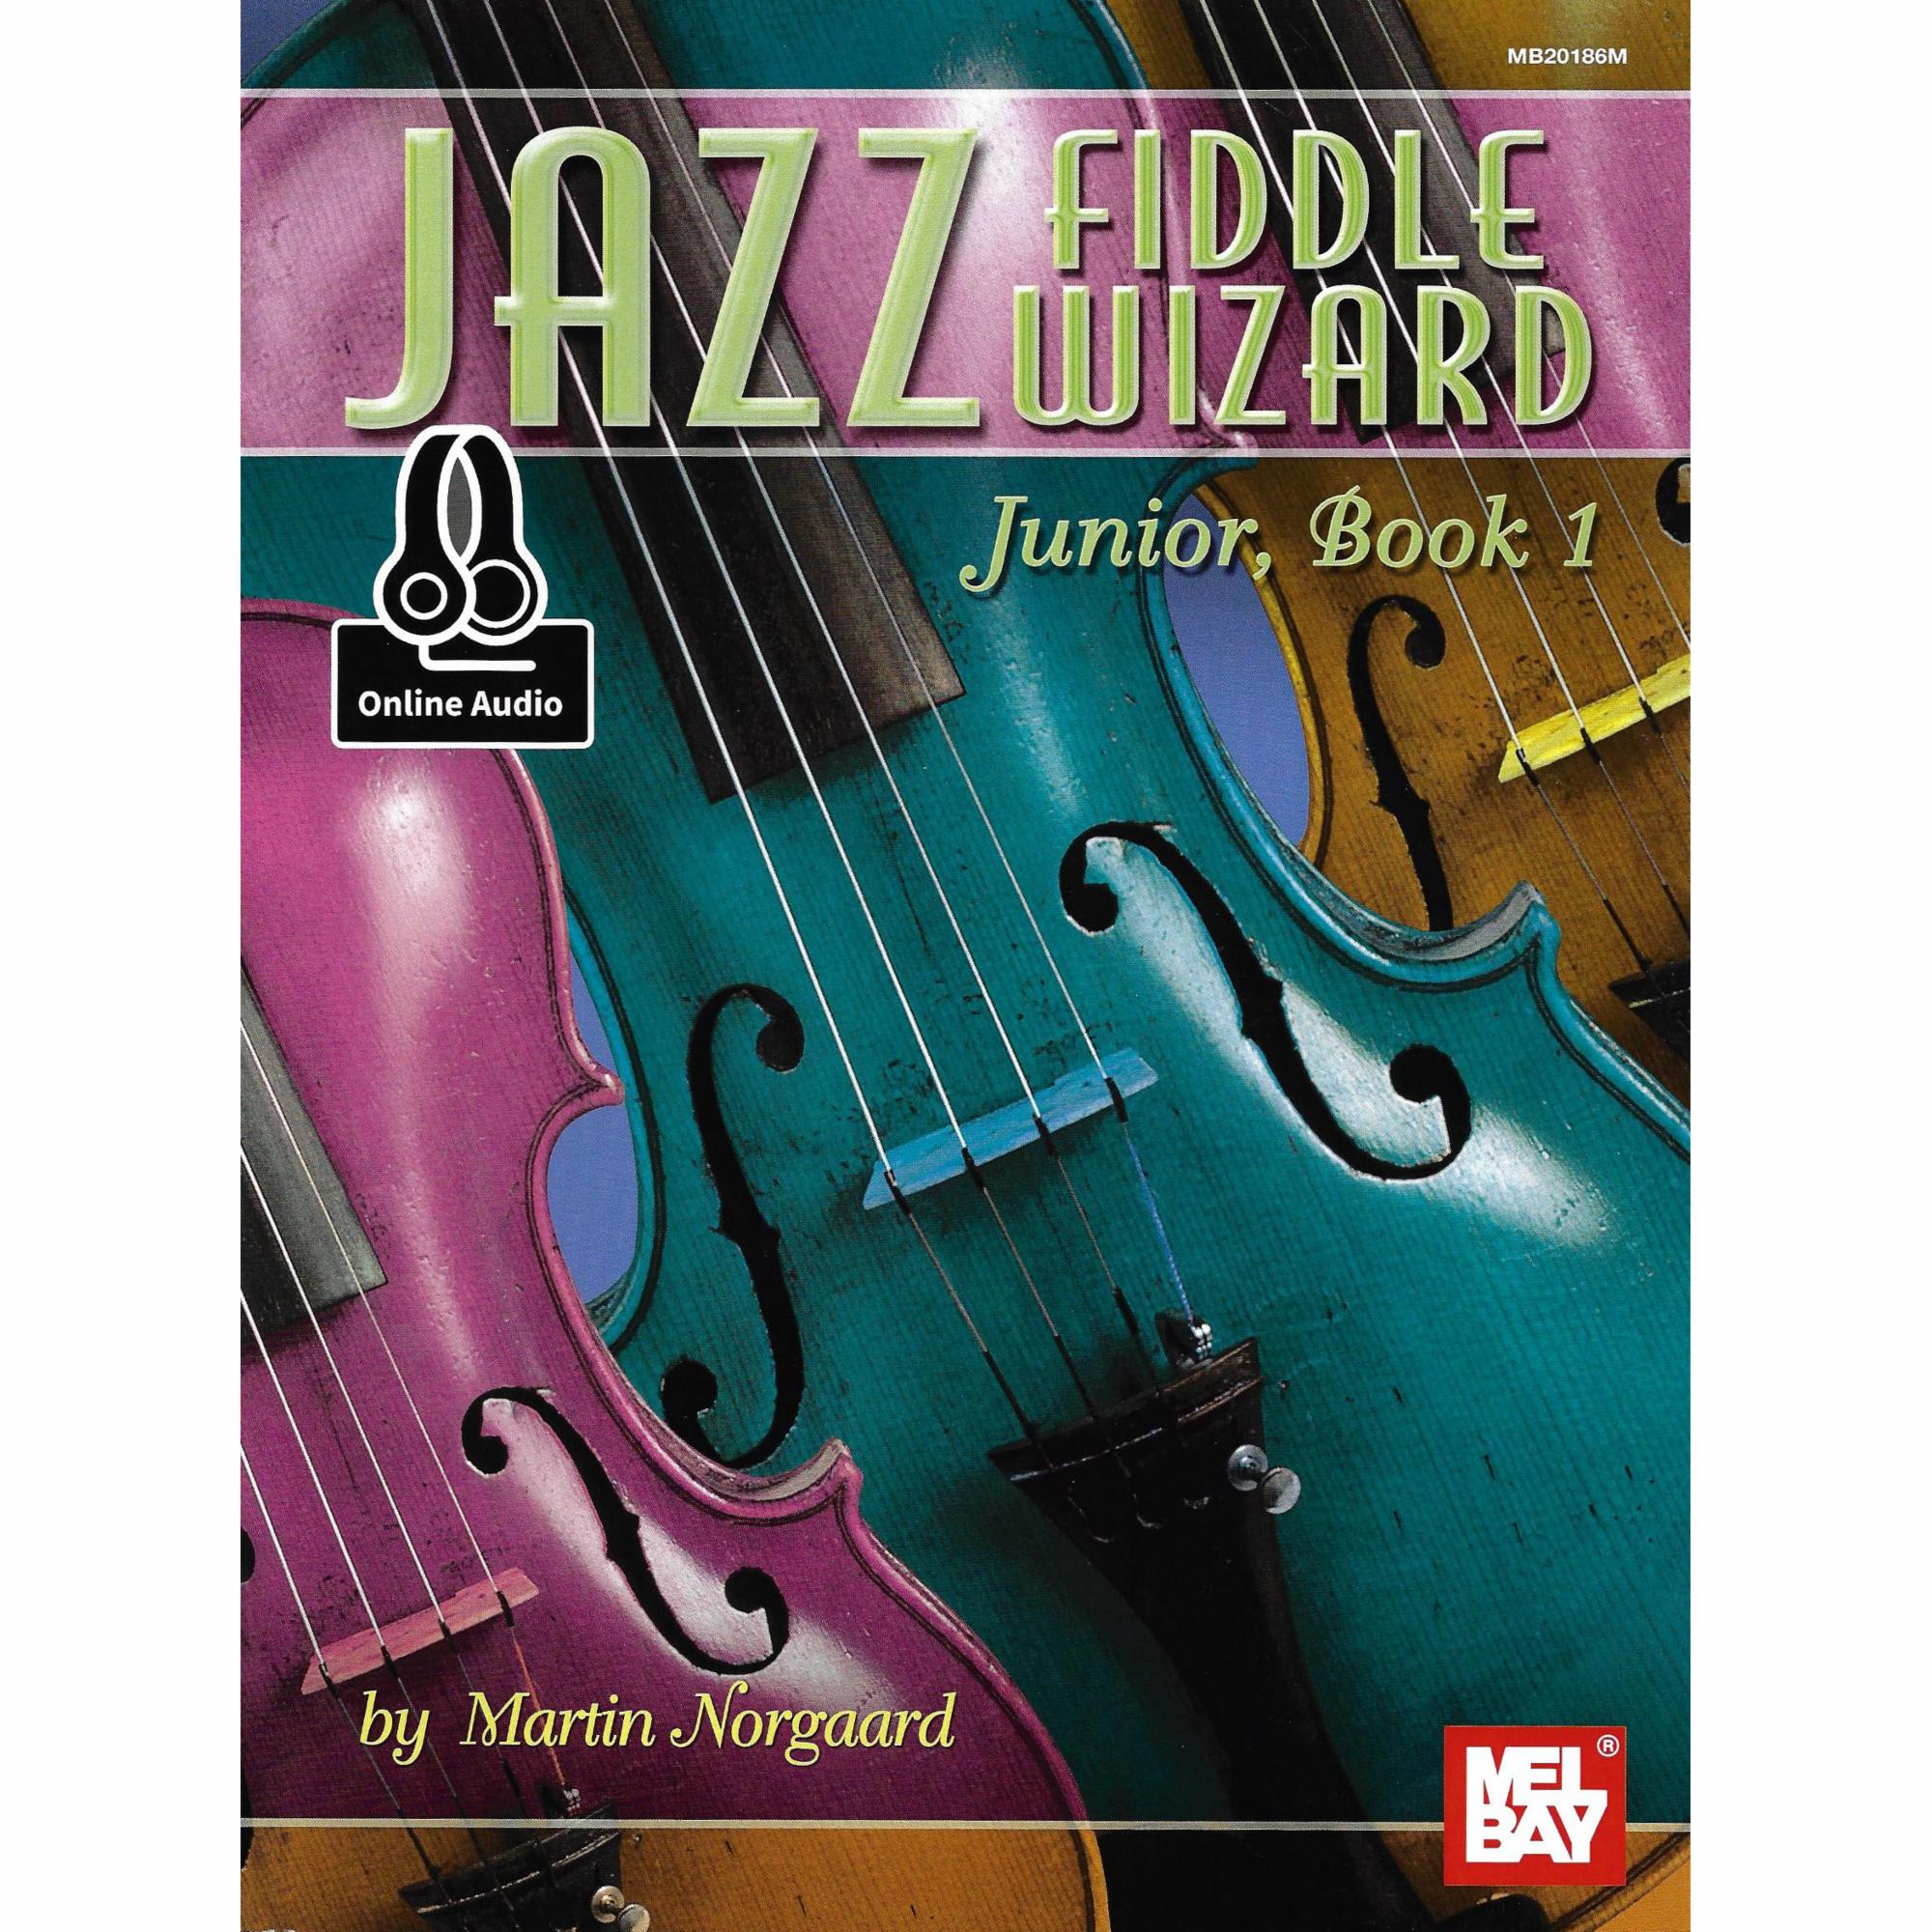 Jazz Fiddle Wizard Jr., Book 1 for Violin, Viola, or Cello